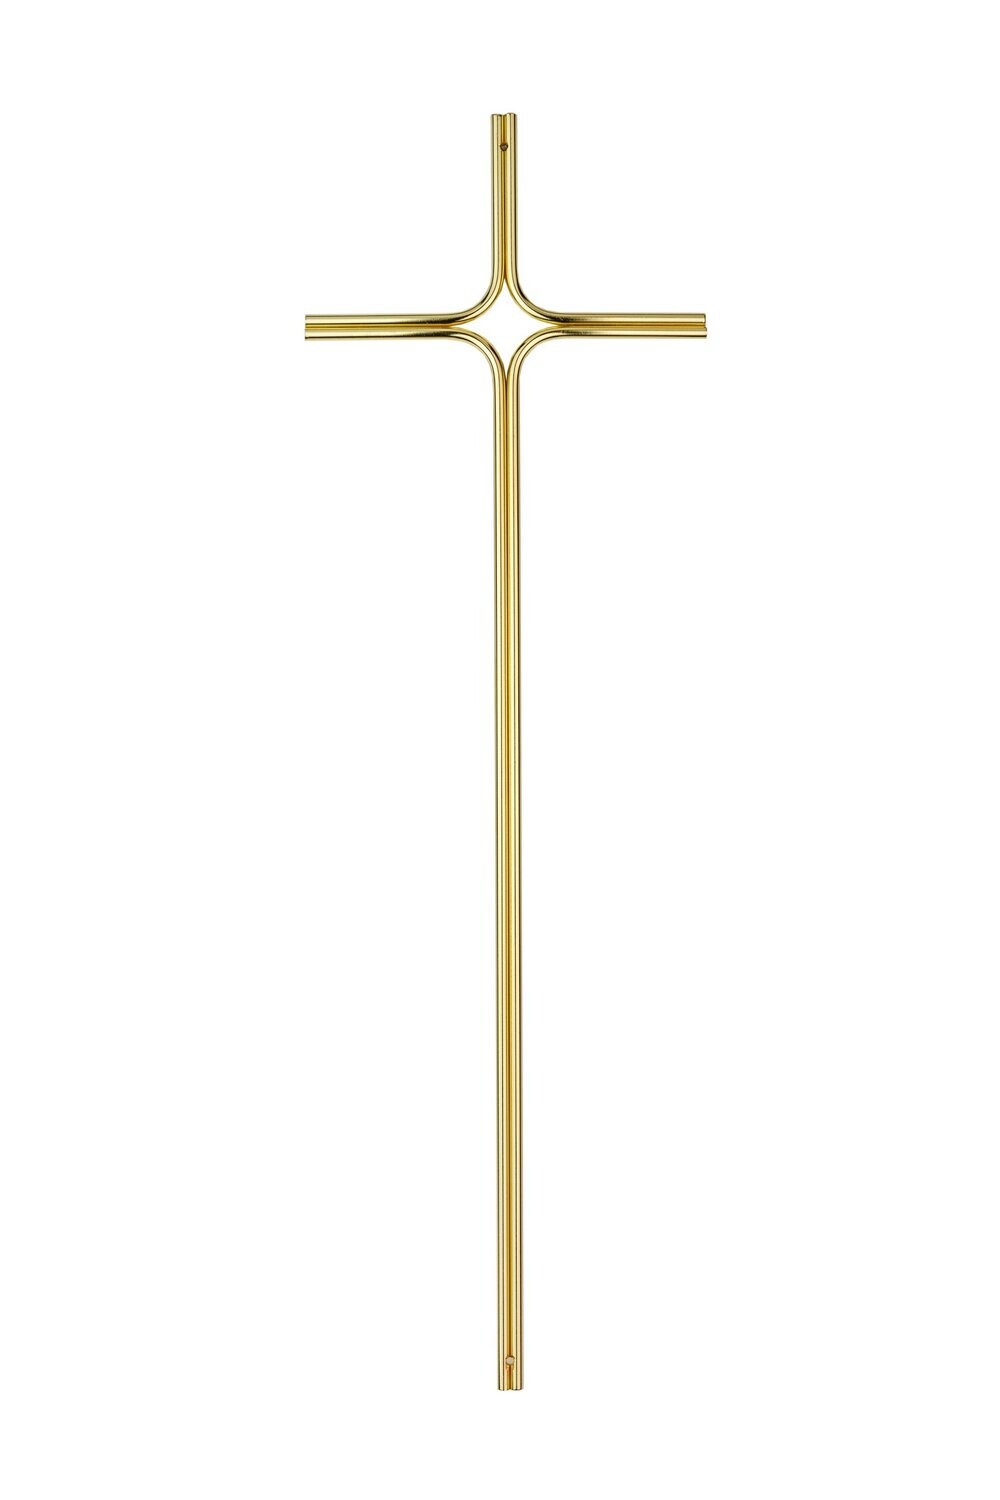 Cross for coffin in steel series 558 polish brass finishing